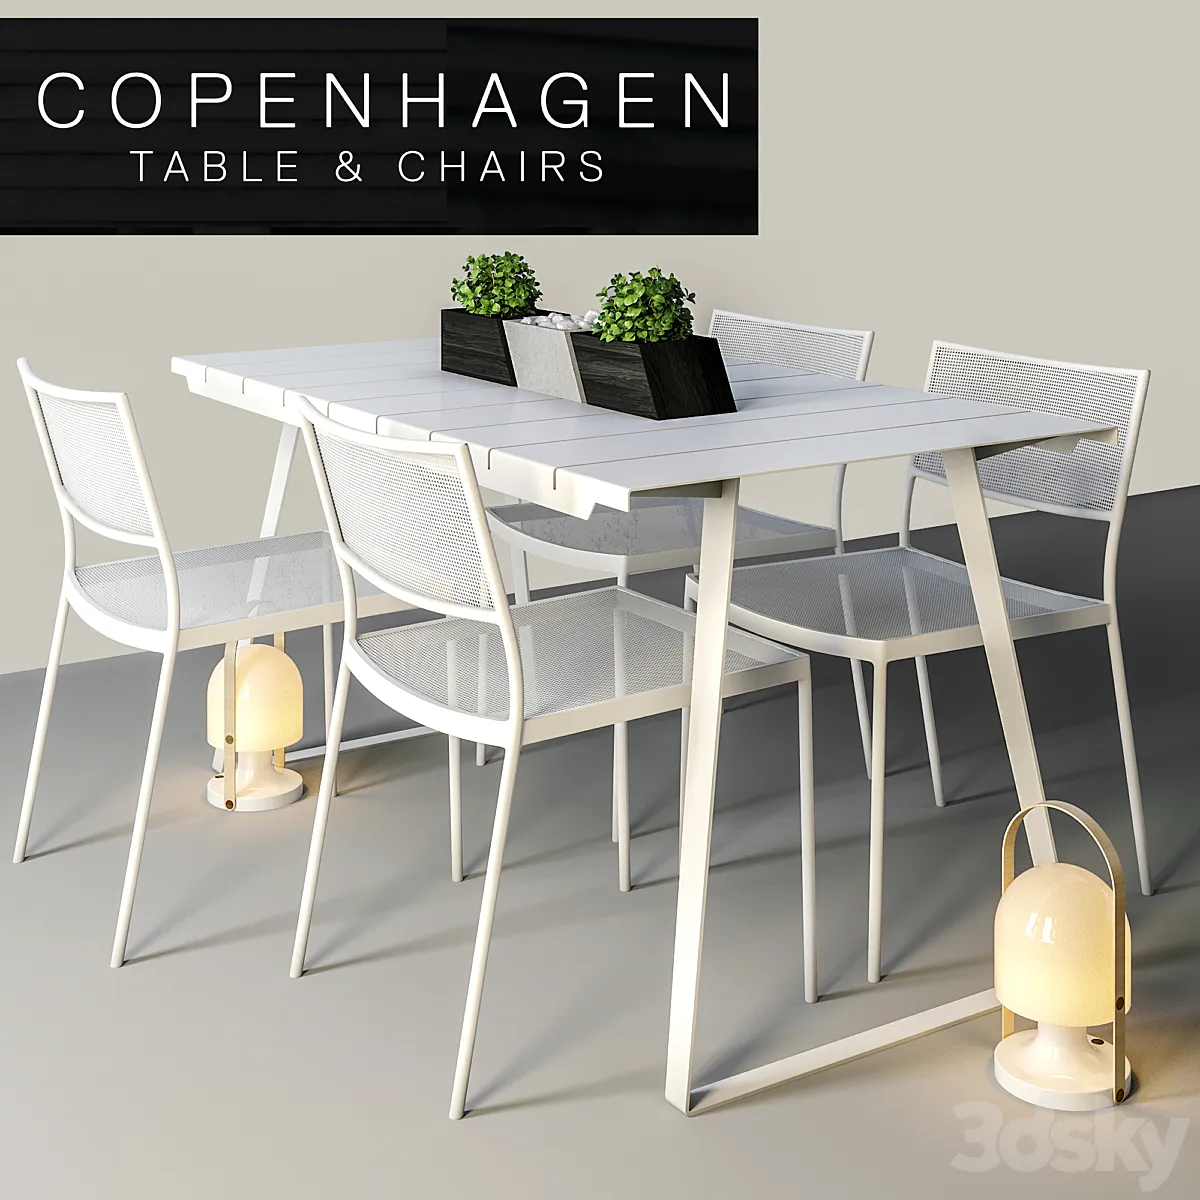 3dsky - Copenhagen Chairs & Table - Table + Chair - 3D model